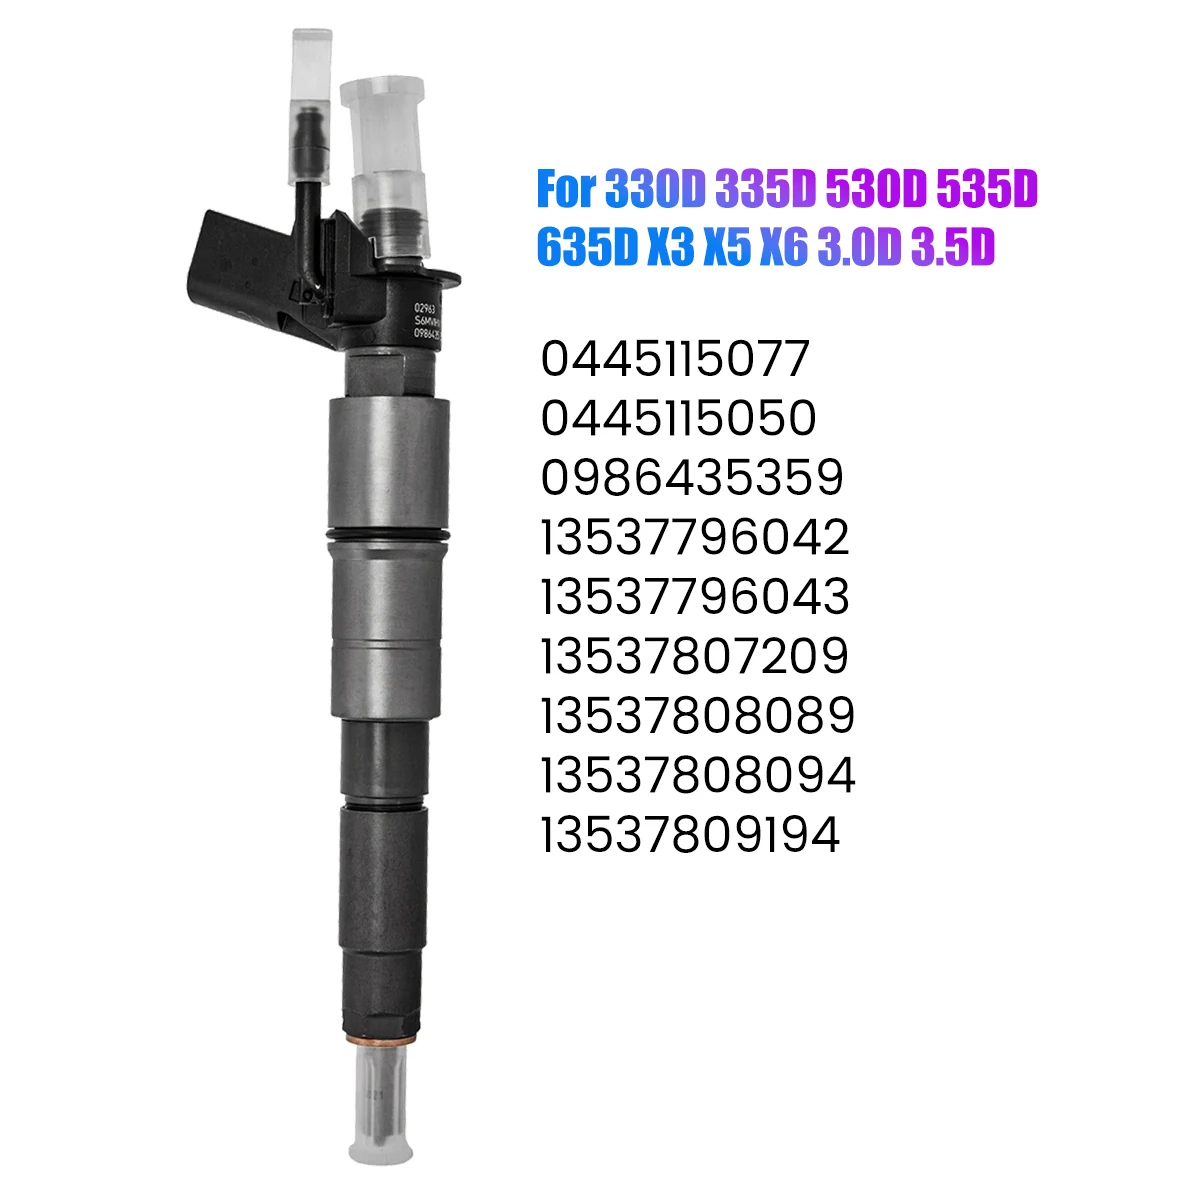 

Diesel Fuel Injector for BMW 3 5 6 330D 535D Series X3 X5 X6 3.0D 3.5D 2005- 2013 CDI 0445115077 13537808089